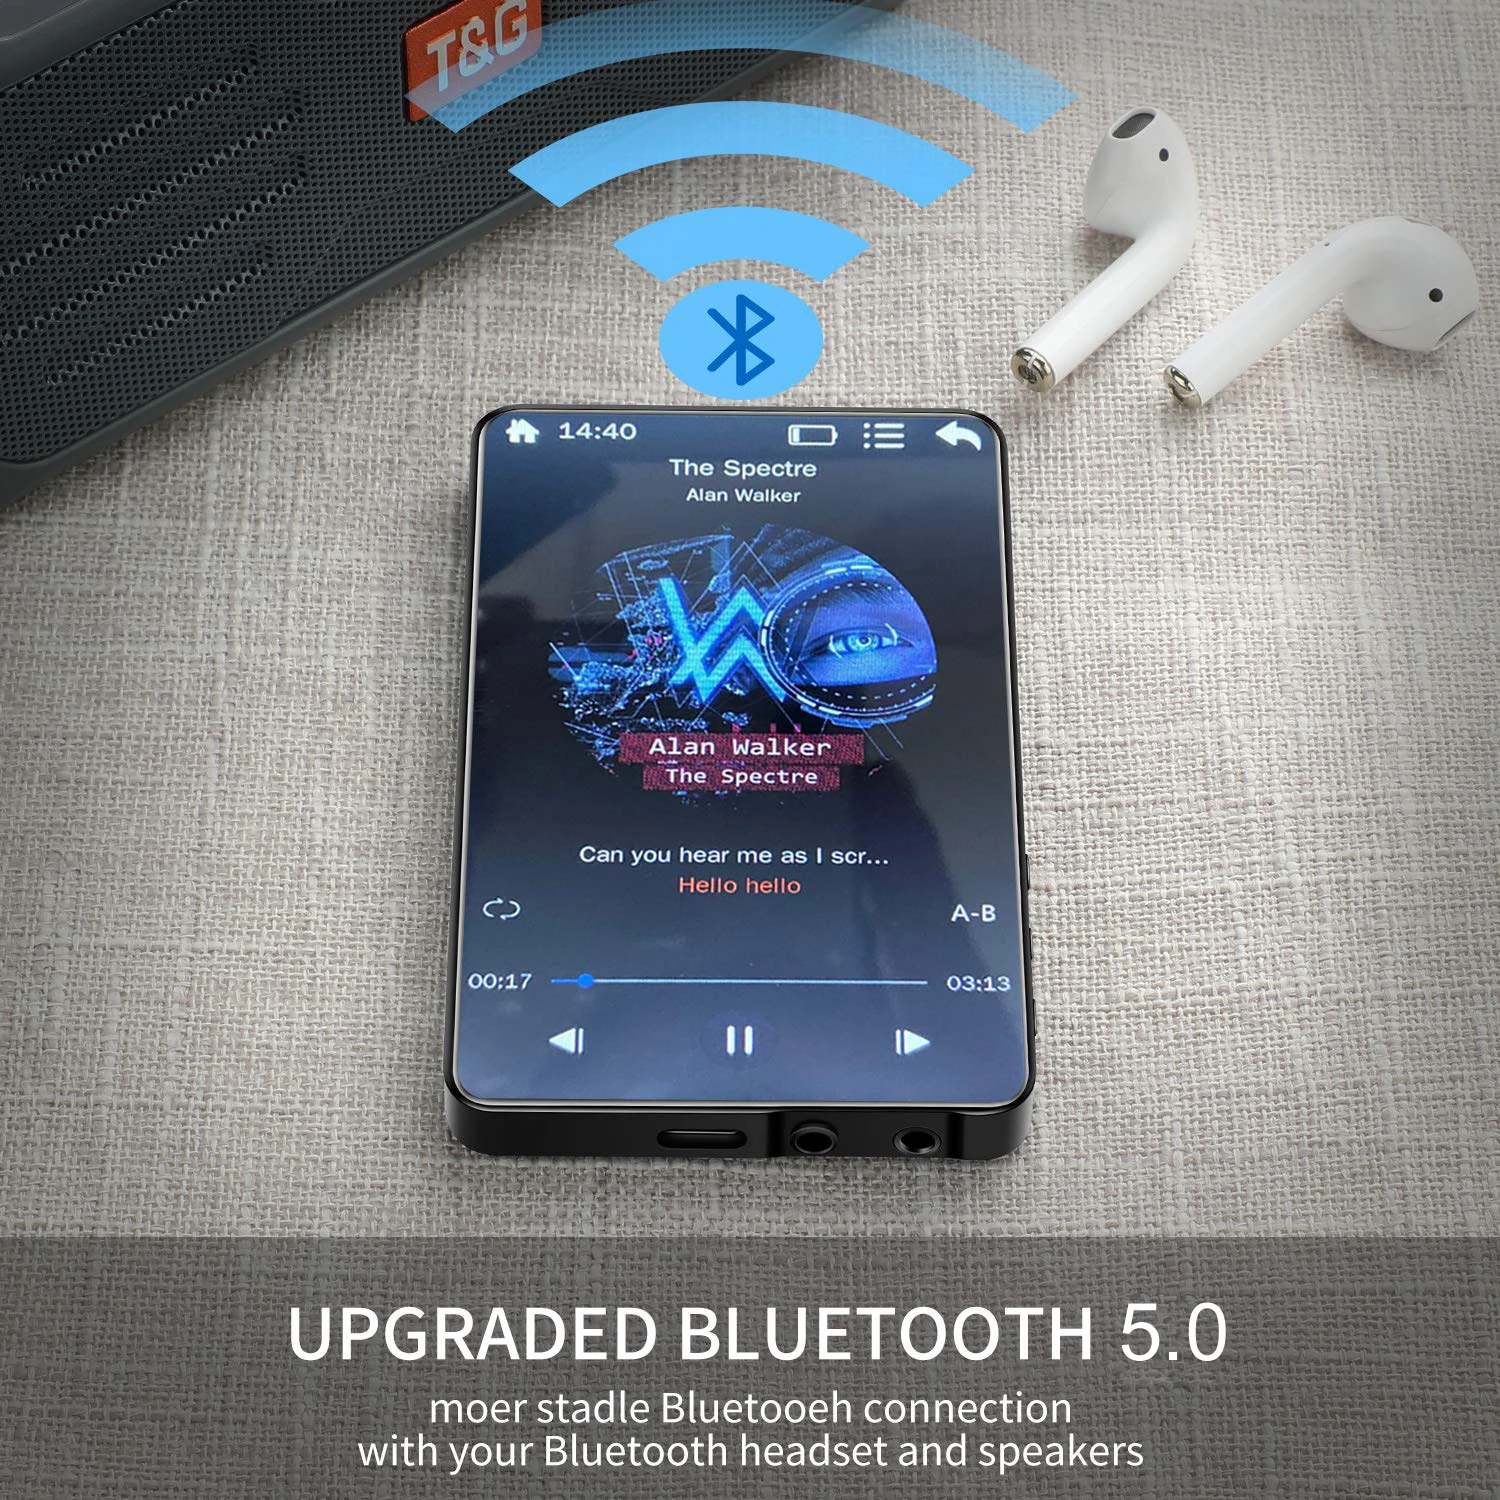 Yophoon 4 Inch X20-New Ui Mp4 Muziekspeler Touchscreen 16Gb Bt 5.0 Met Luidspreker 1080P Video Ebook Fm Mp3 Audiospeler 16G-256G